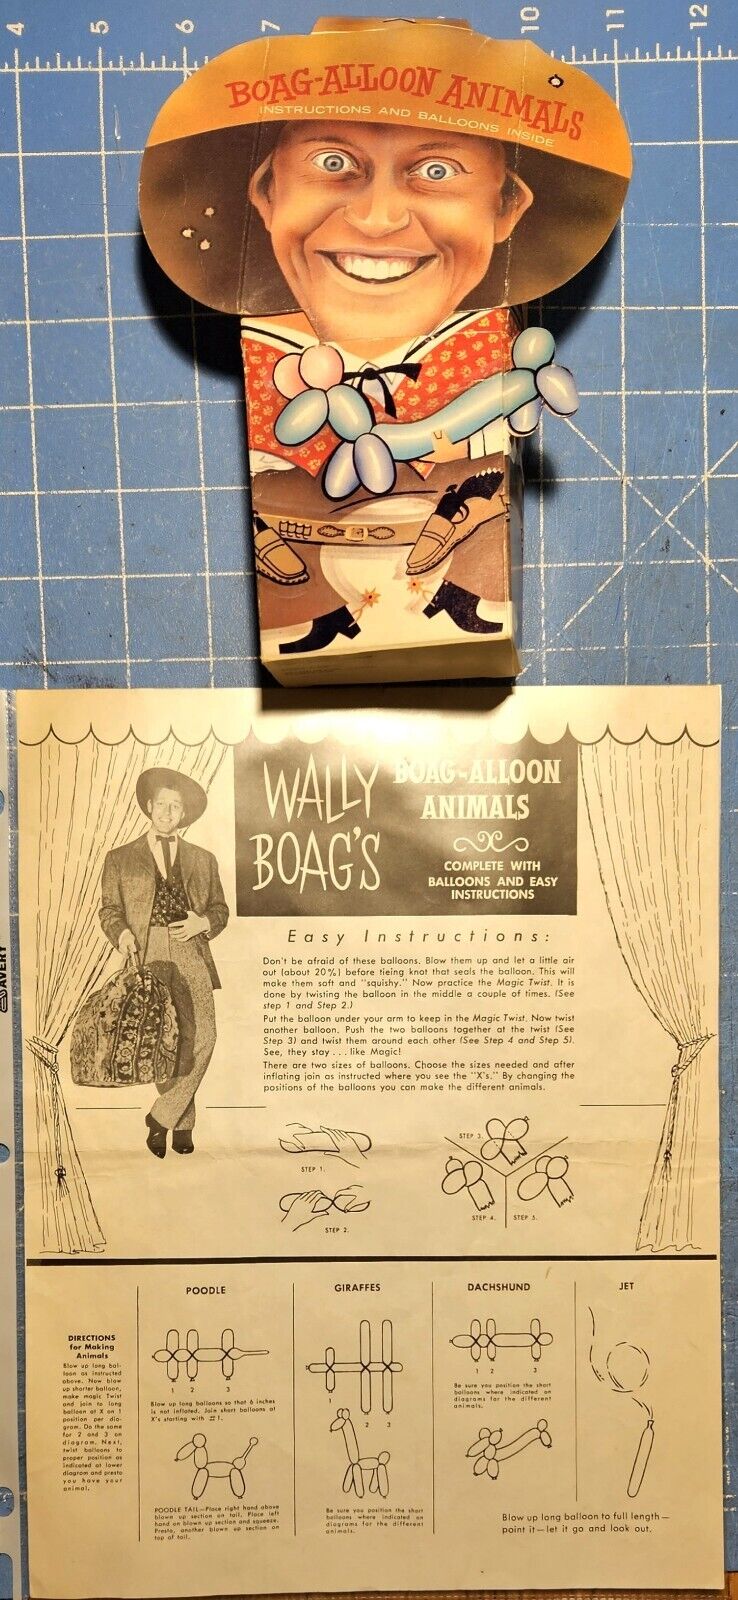 Wally Boag, BoagAlloon Animals, Golden Horseshoe-The Clown Prince of Disneyland 